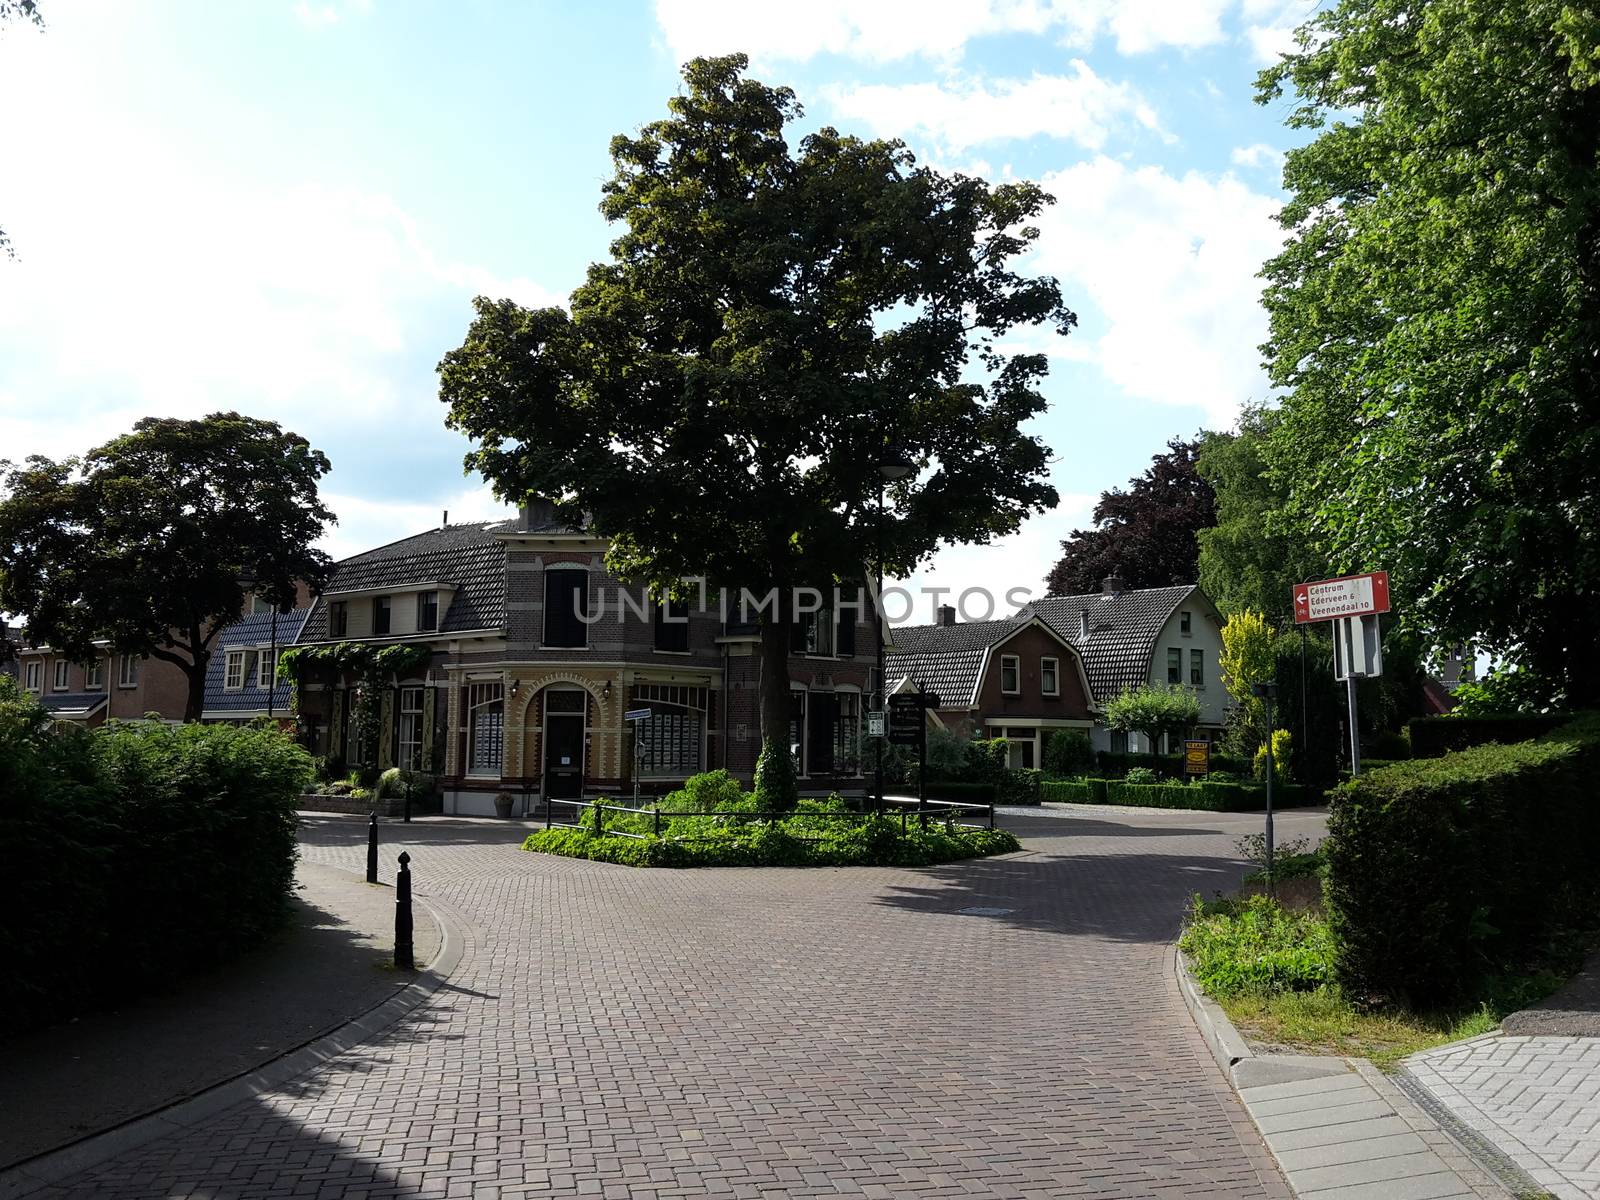 Lunteren, Netherlands - June 6, 2017 - The village of Lunteren in County Ede in the Netherlands